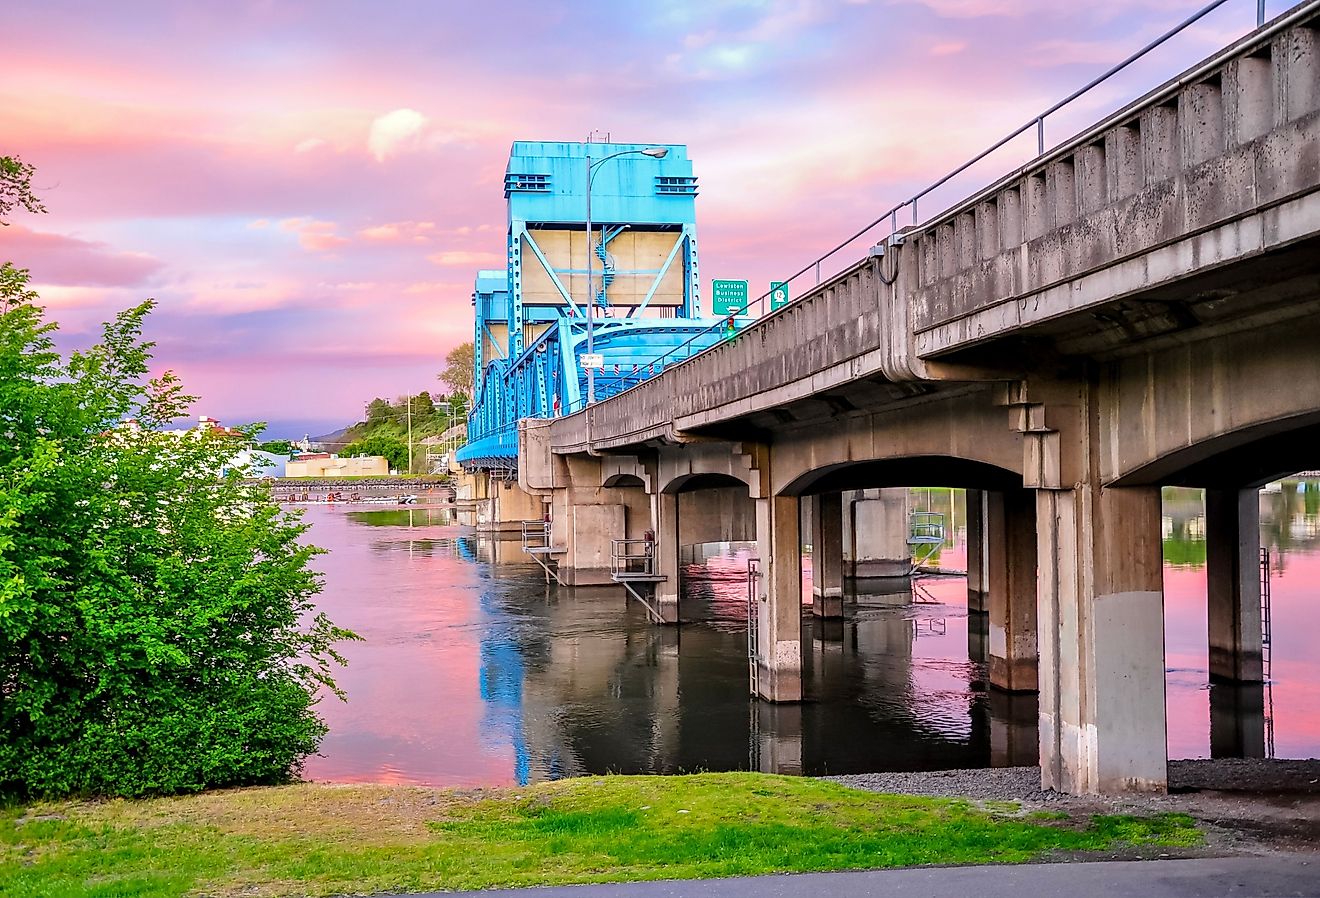 Historic Lewiston, Idaho with the Clarkston Blue Bridge against a pink sky.